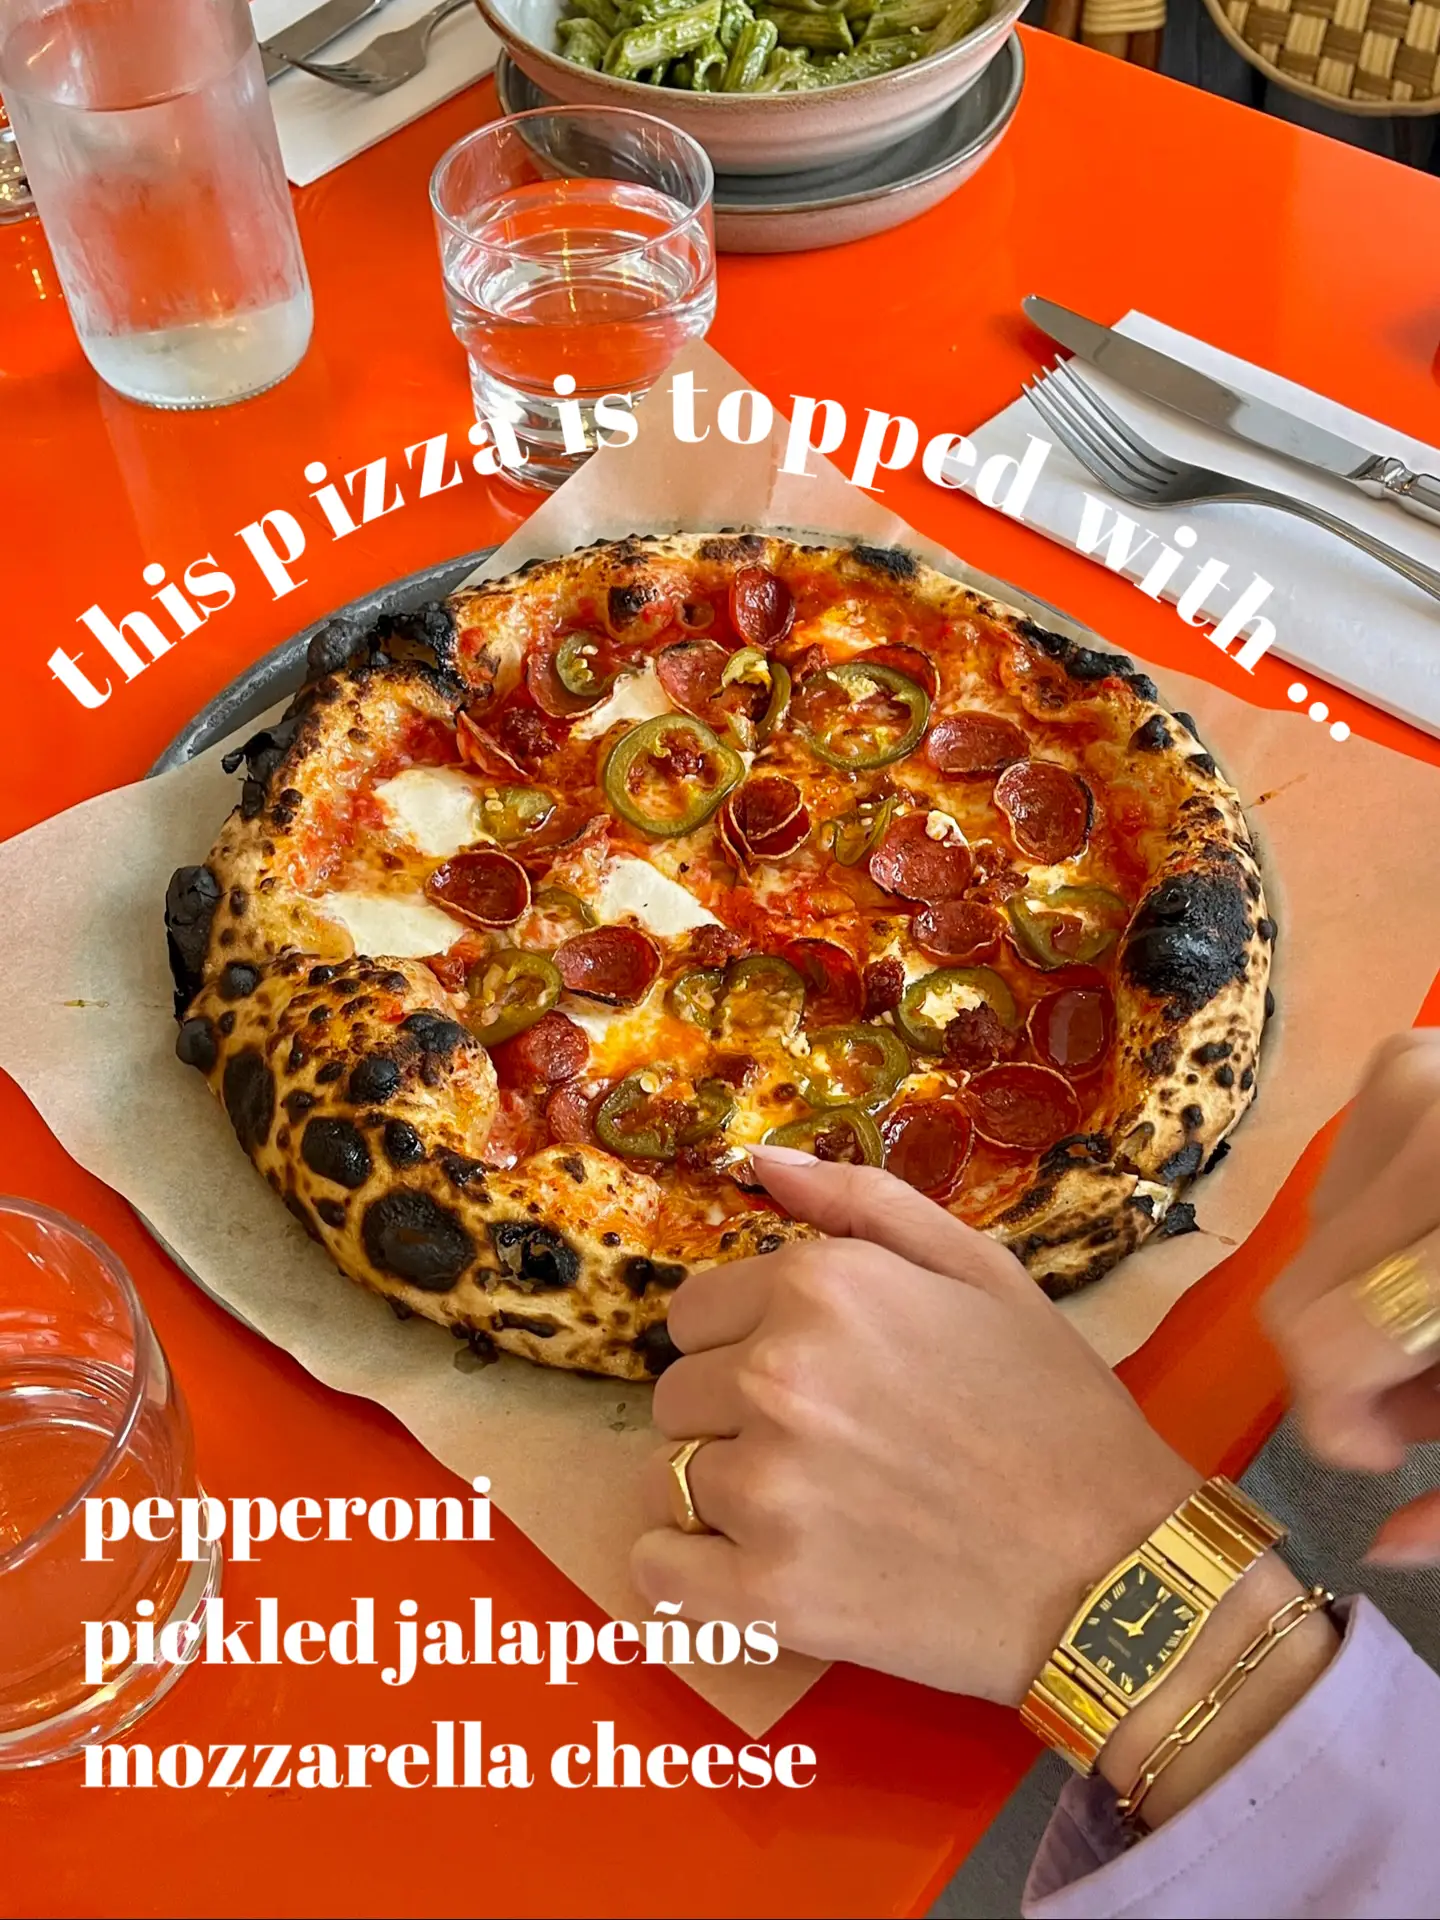  A pizza with pepperoni, jalapeños, mozzarella cheese and tomato sauce.